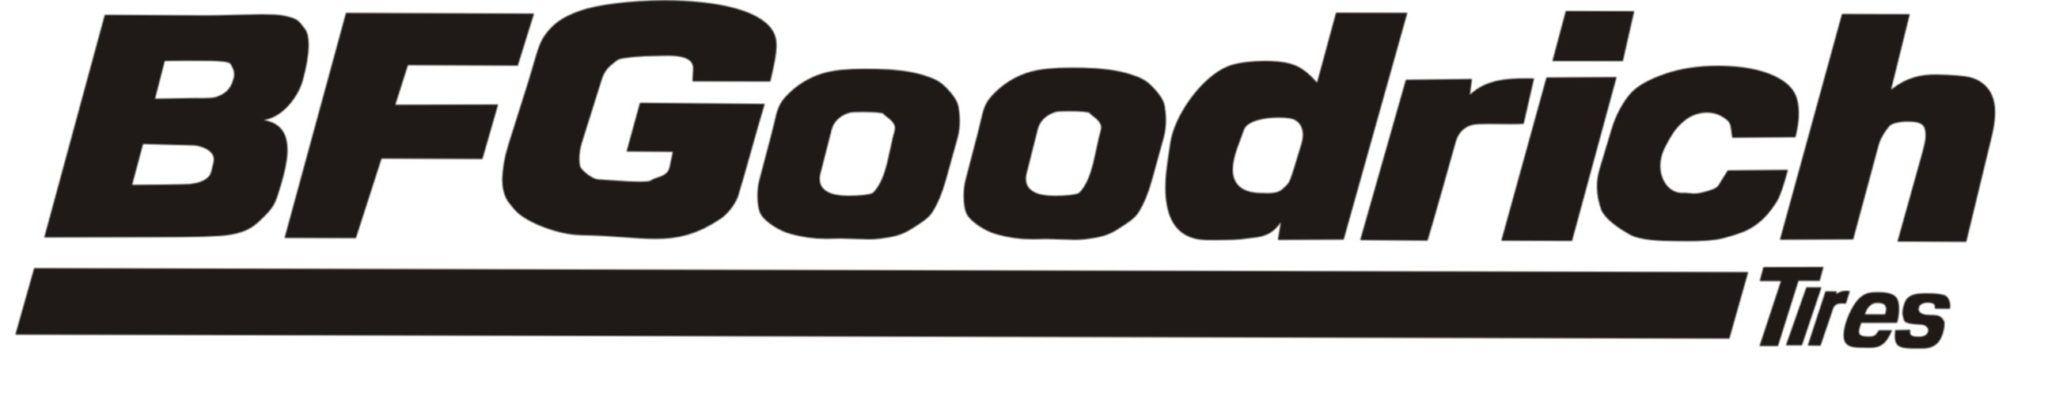 BFGoodrich Logo - Bf goodrich Logos